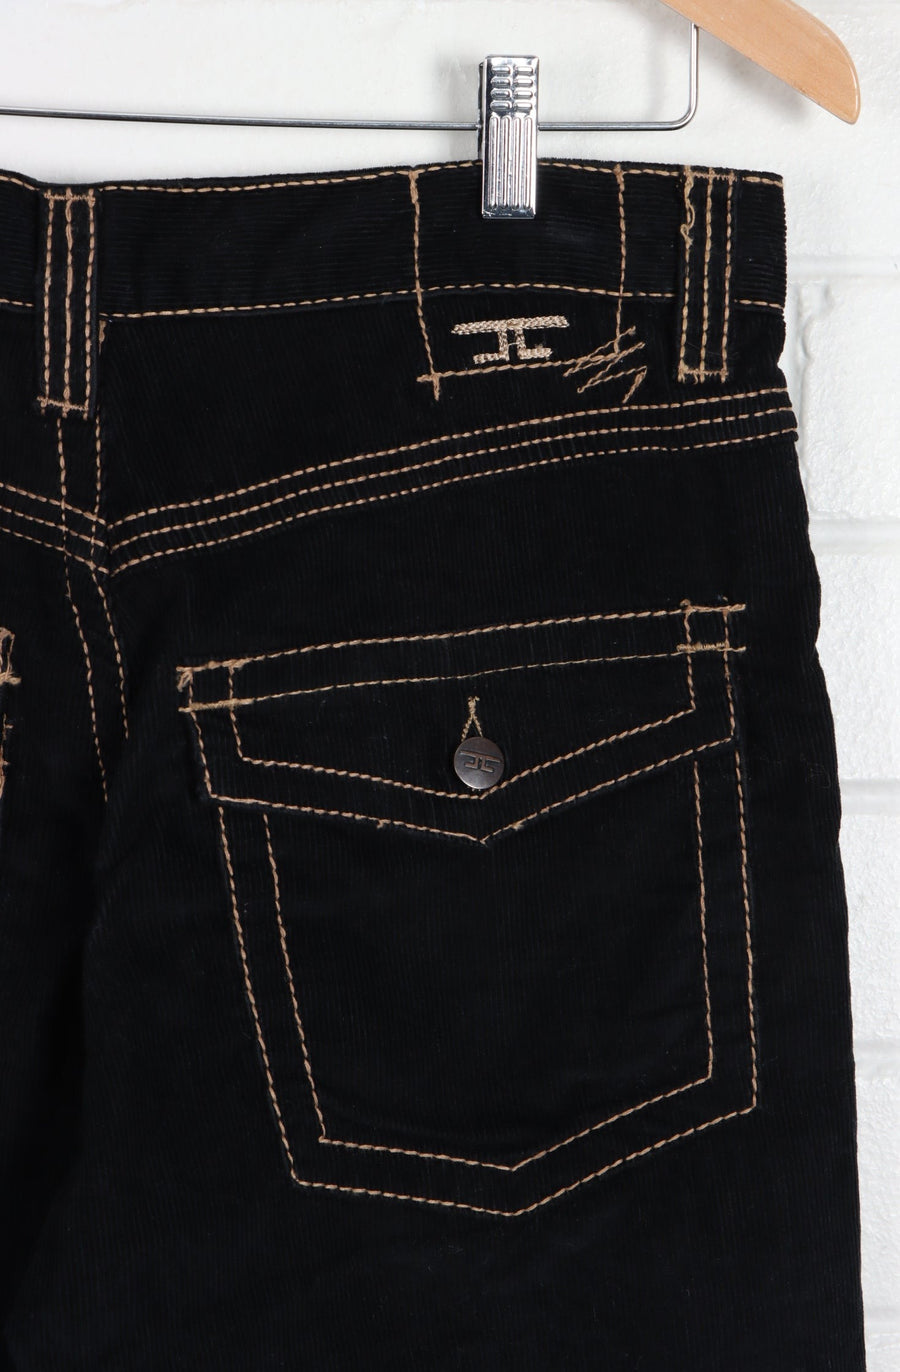 JORDAN CRAIG Black Cord Pants with Gold Stitching (32 x 32) - Vintage Sole Melbourne